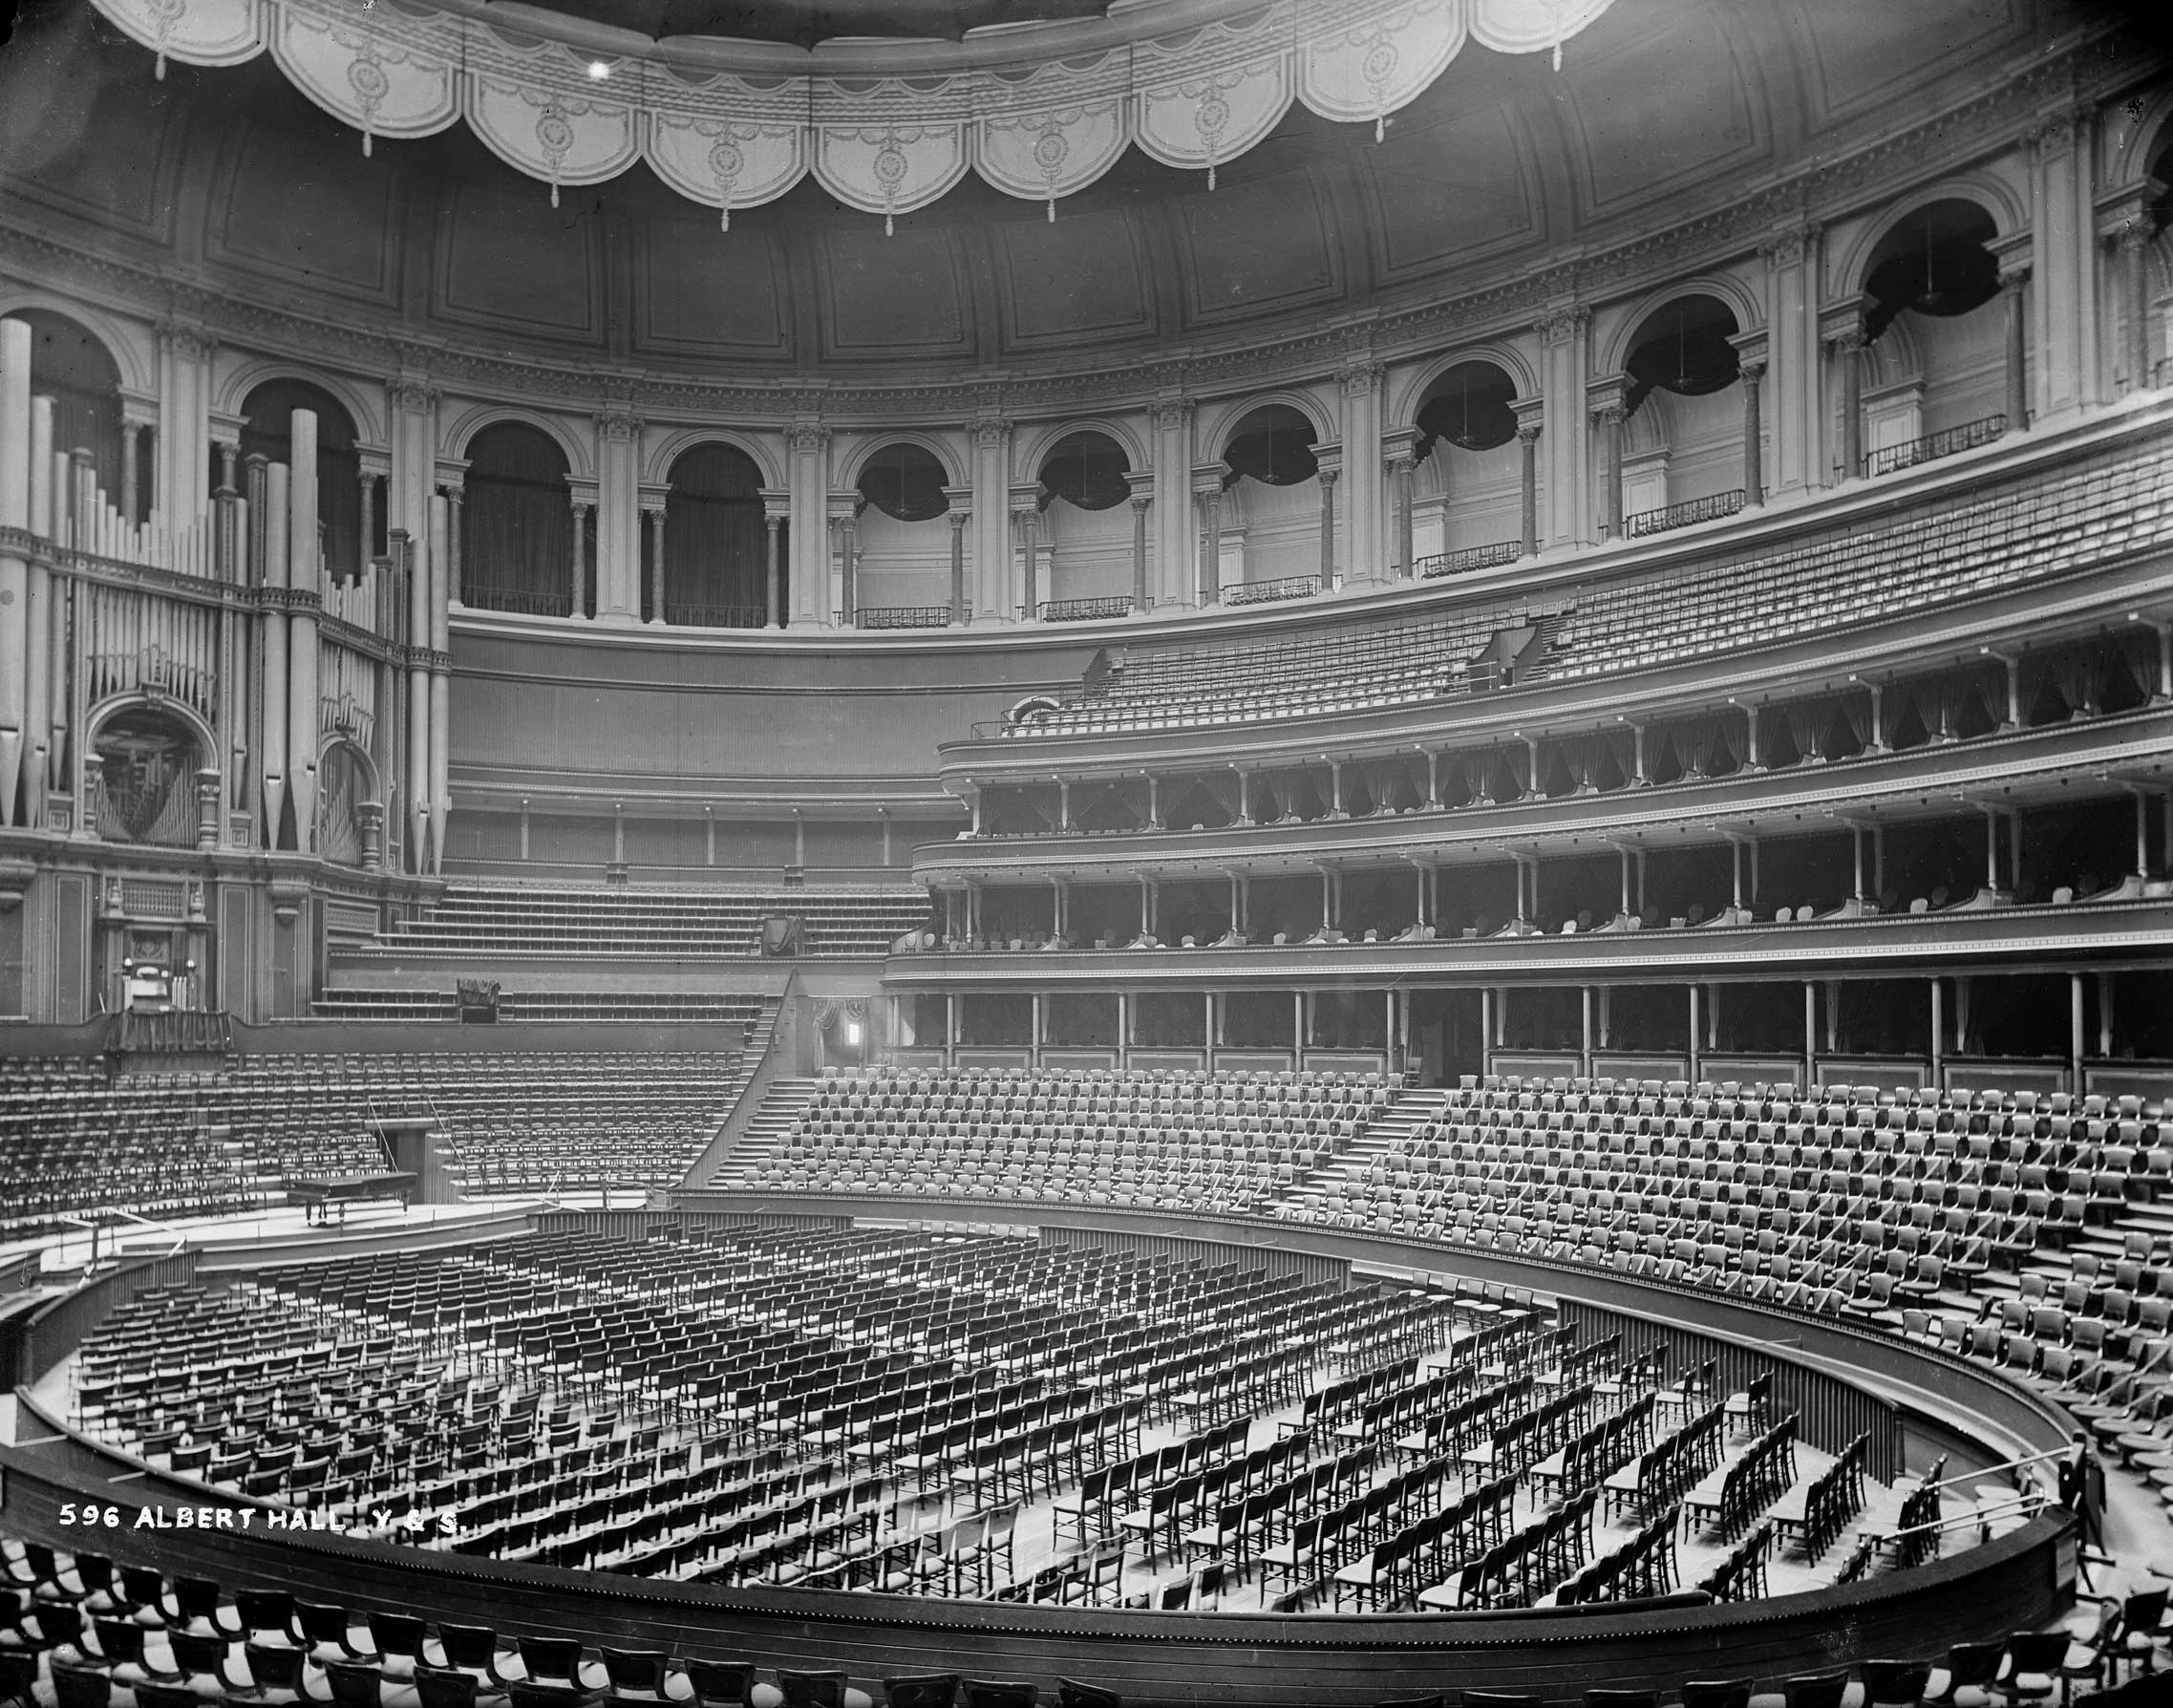 The interior of the Albert Hall, London